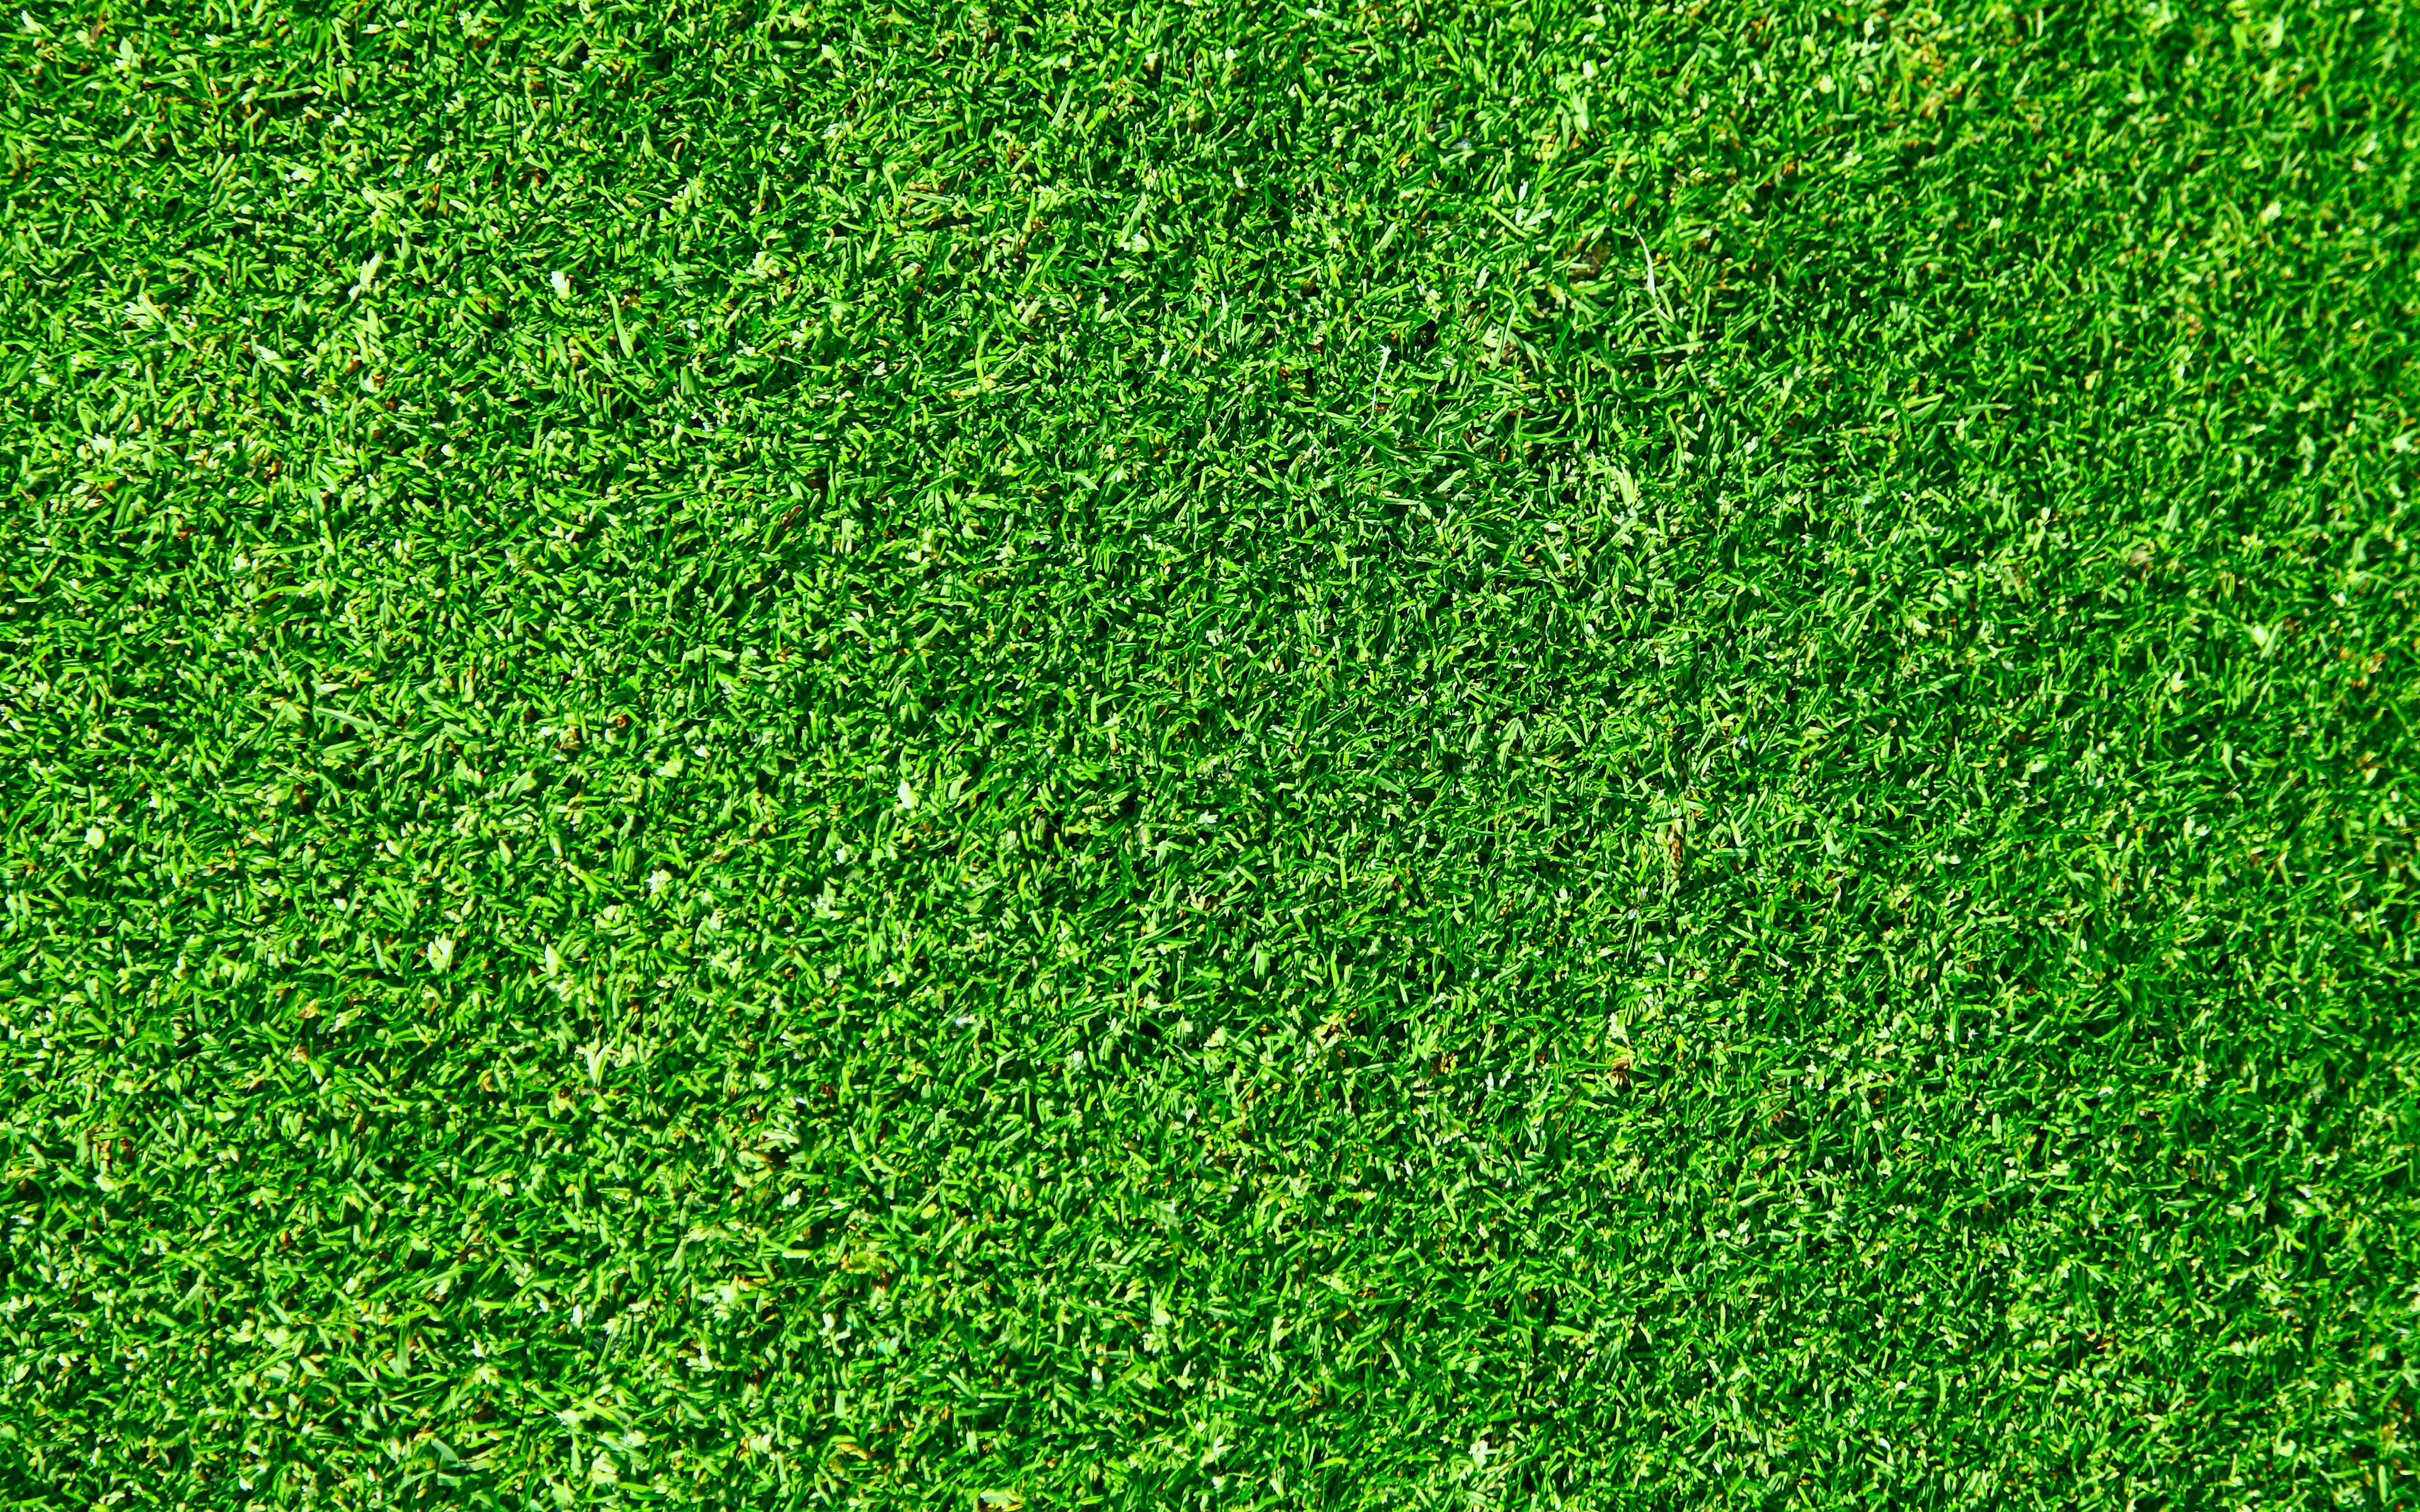 Download Wallpaper Green Grass Texture, 4k, Green Background, Grass Textures, Green Grass, Close Up, Macro, Grass From Top, Grass Background For Desktop With Resolution 3840x2400. High Quality HD Picture Wallpaper